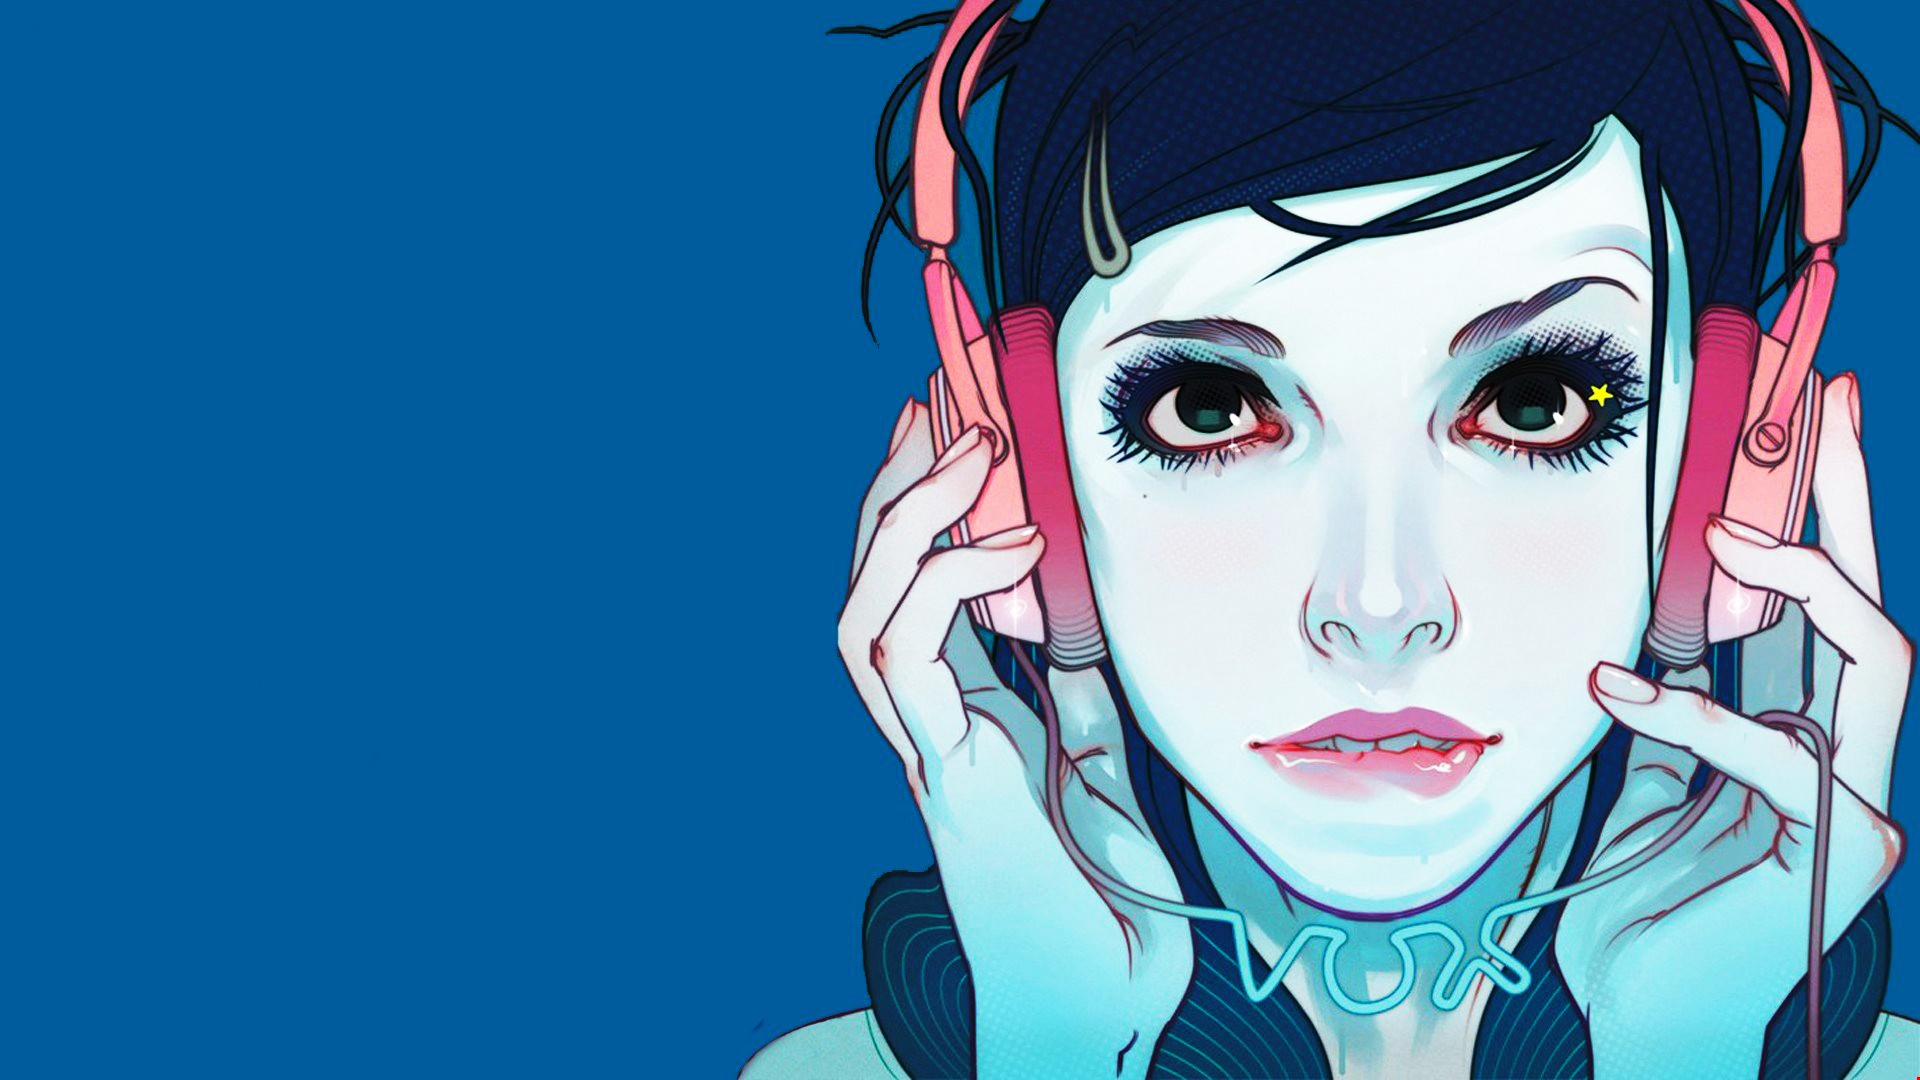 Anime 1920x1080 anime girls headphones blue DubstepGutter digital art artwork simple background cyan blue background face